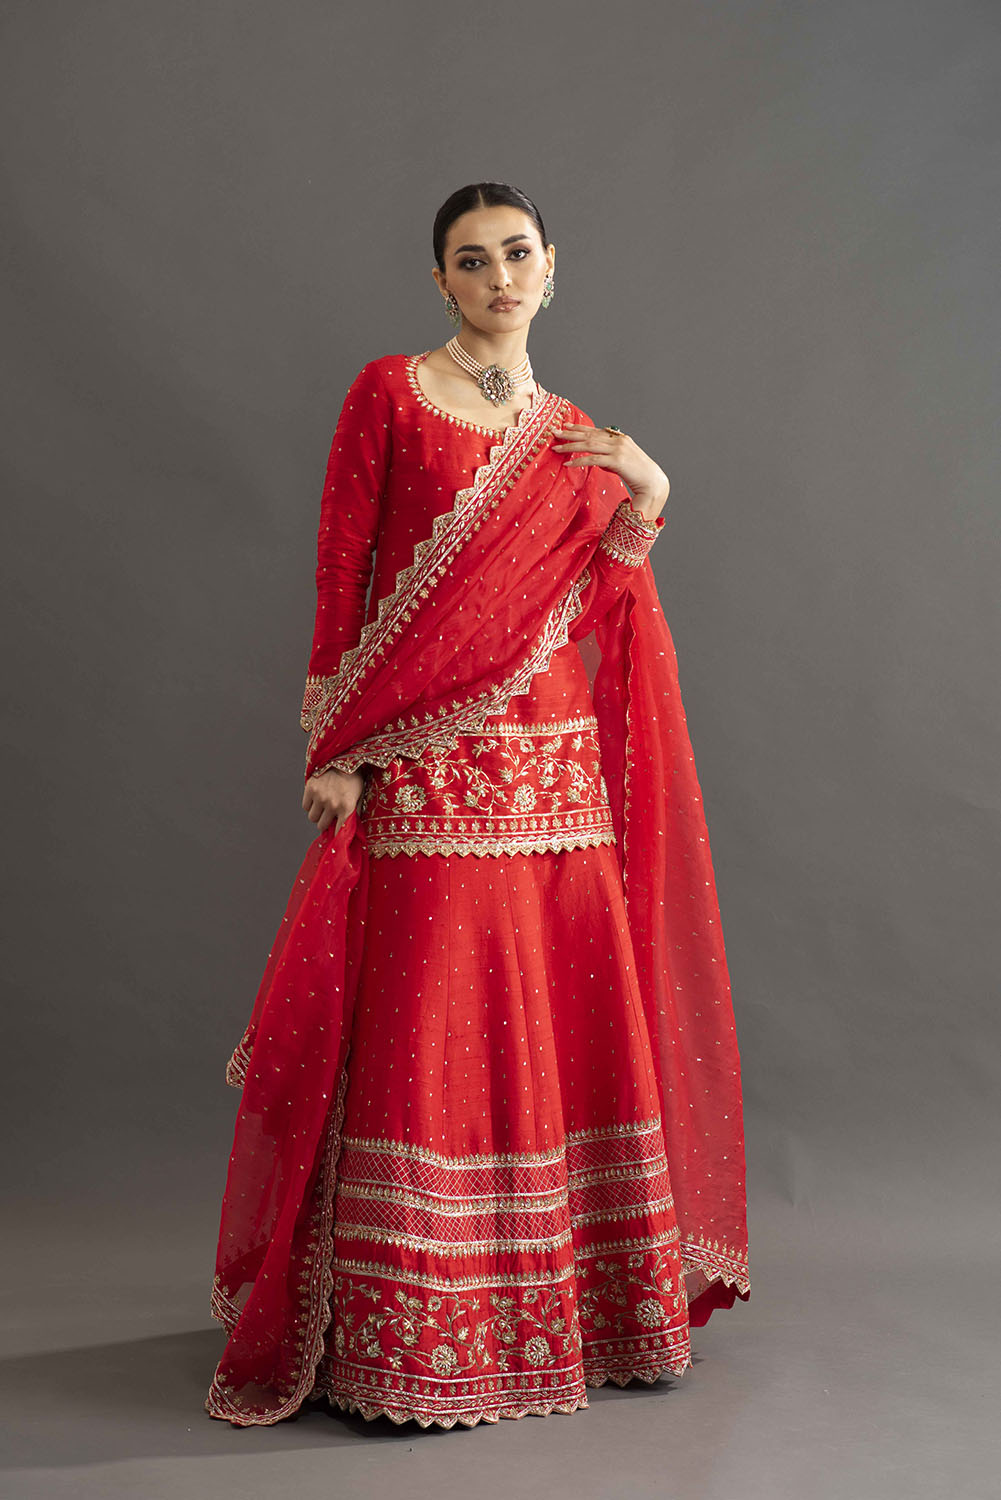 Samantha Ruth Prabhu in Heavy Embroidered Sharara - Red